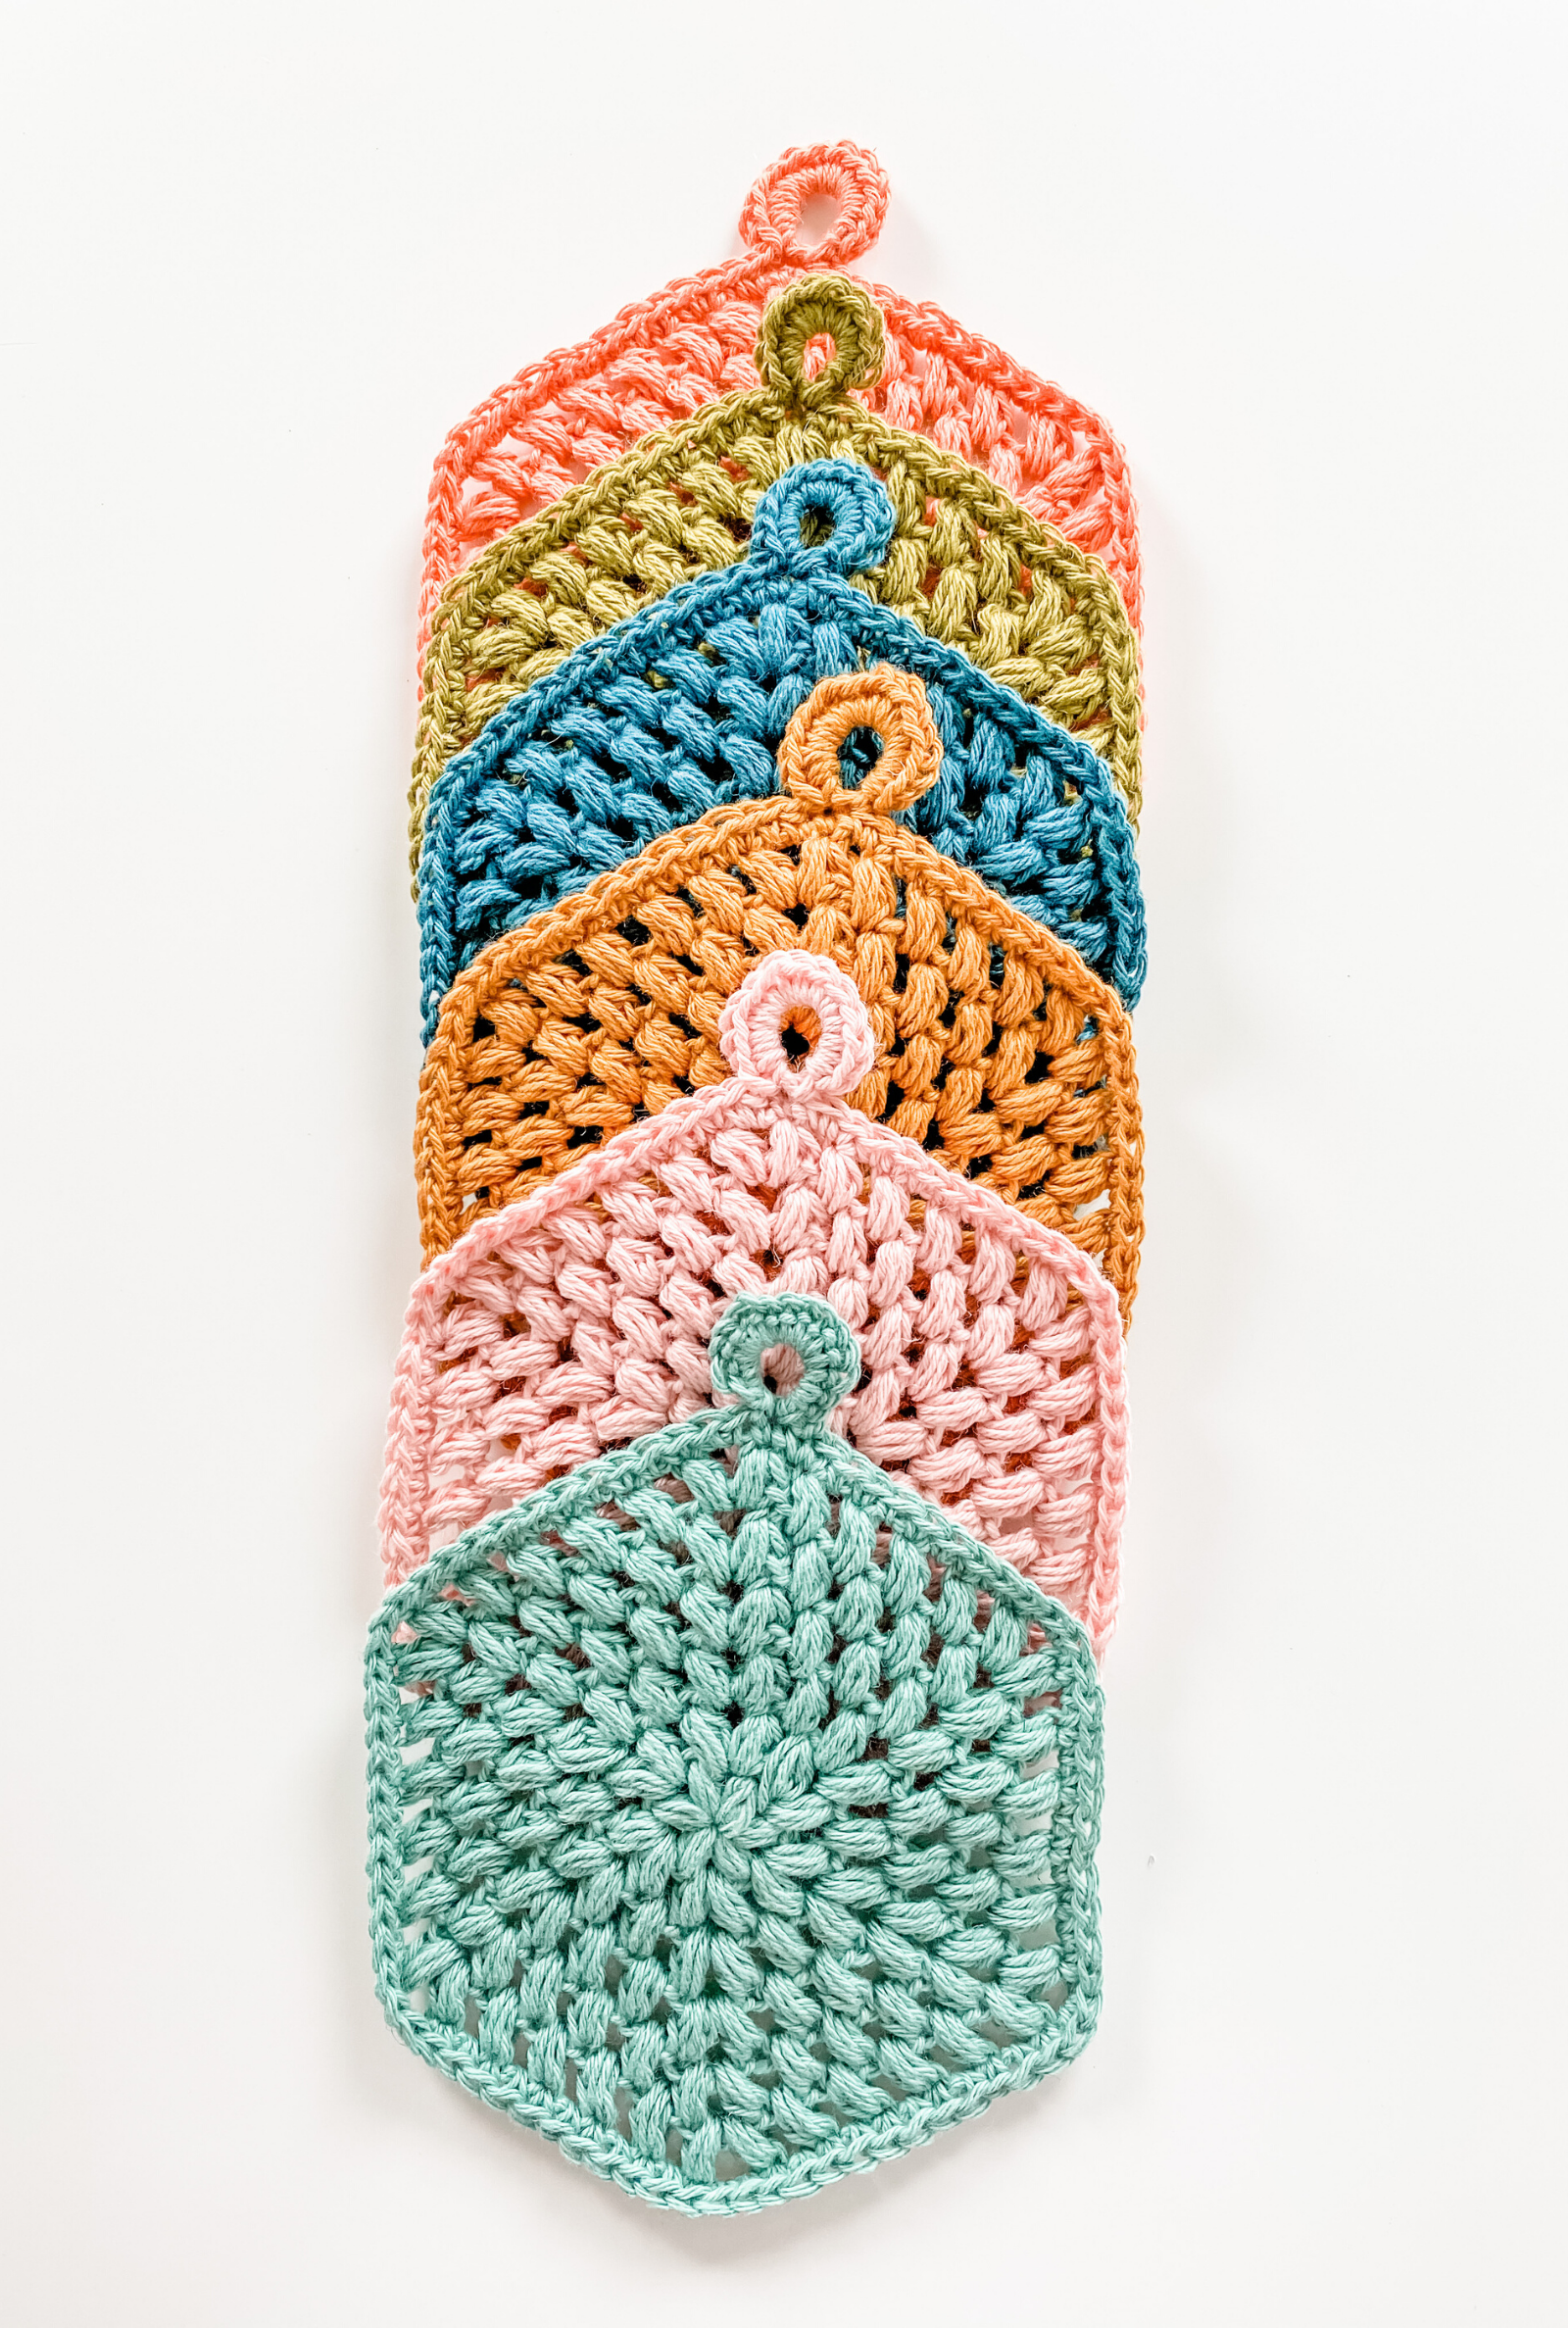 Hexi Puff Coaster // Crochet PDF Pattern